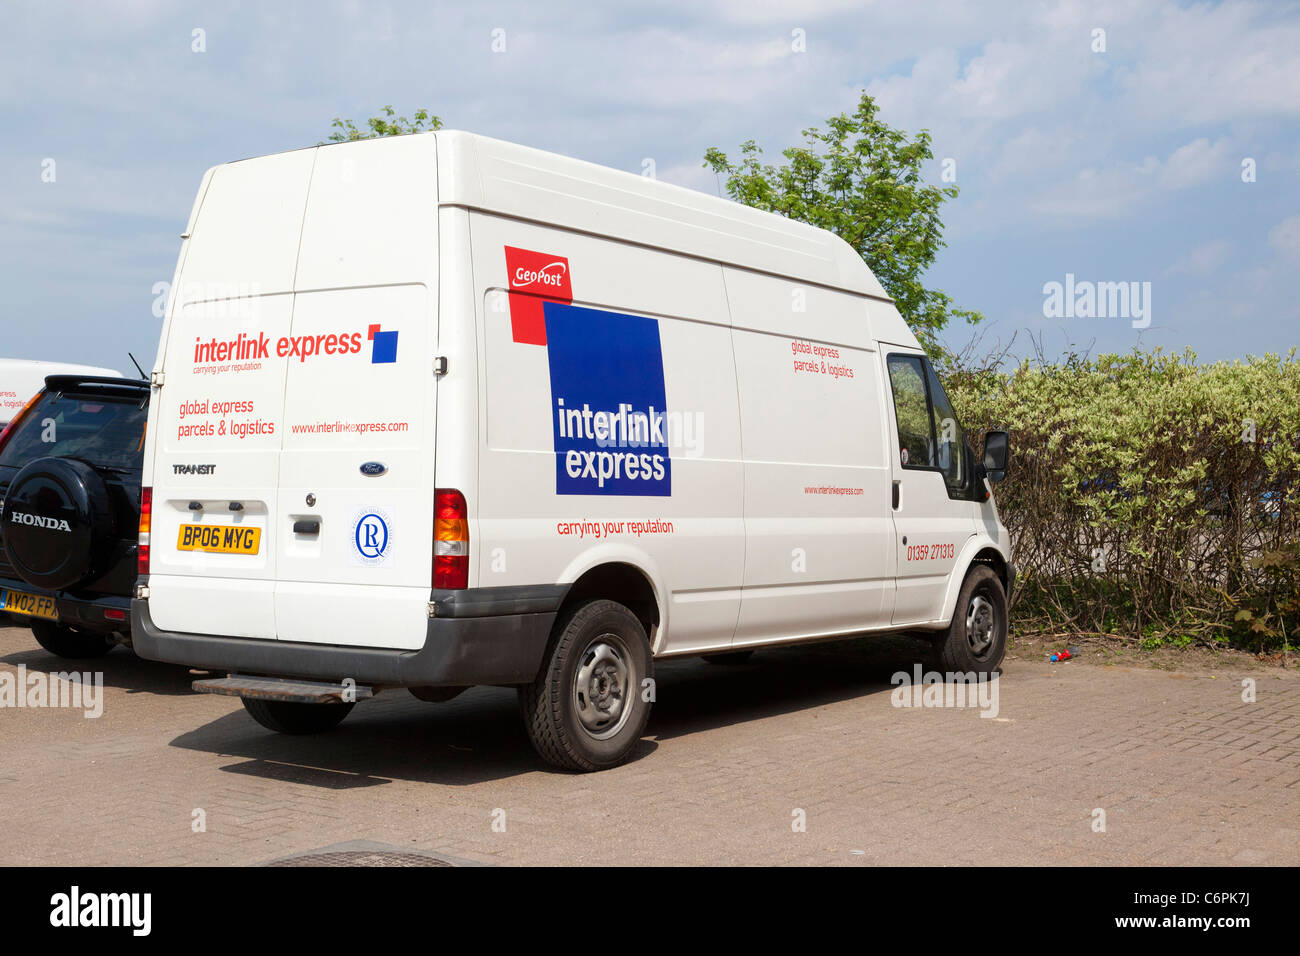 interlink express delivery van in the uk Stock Photo